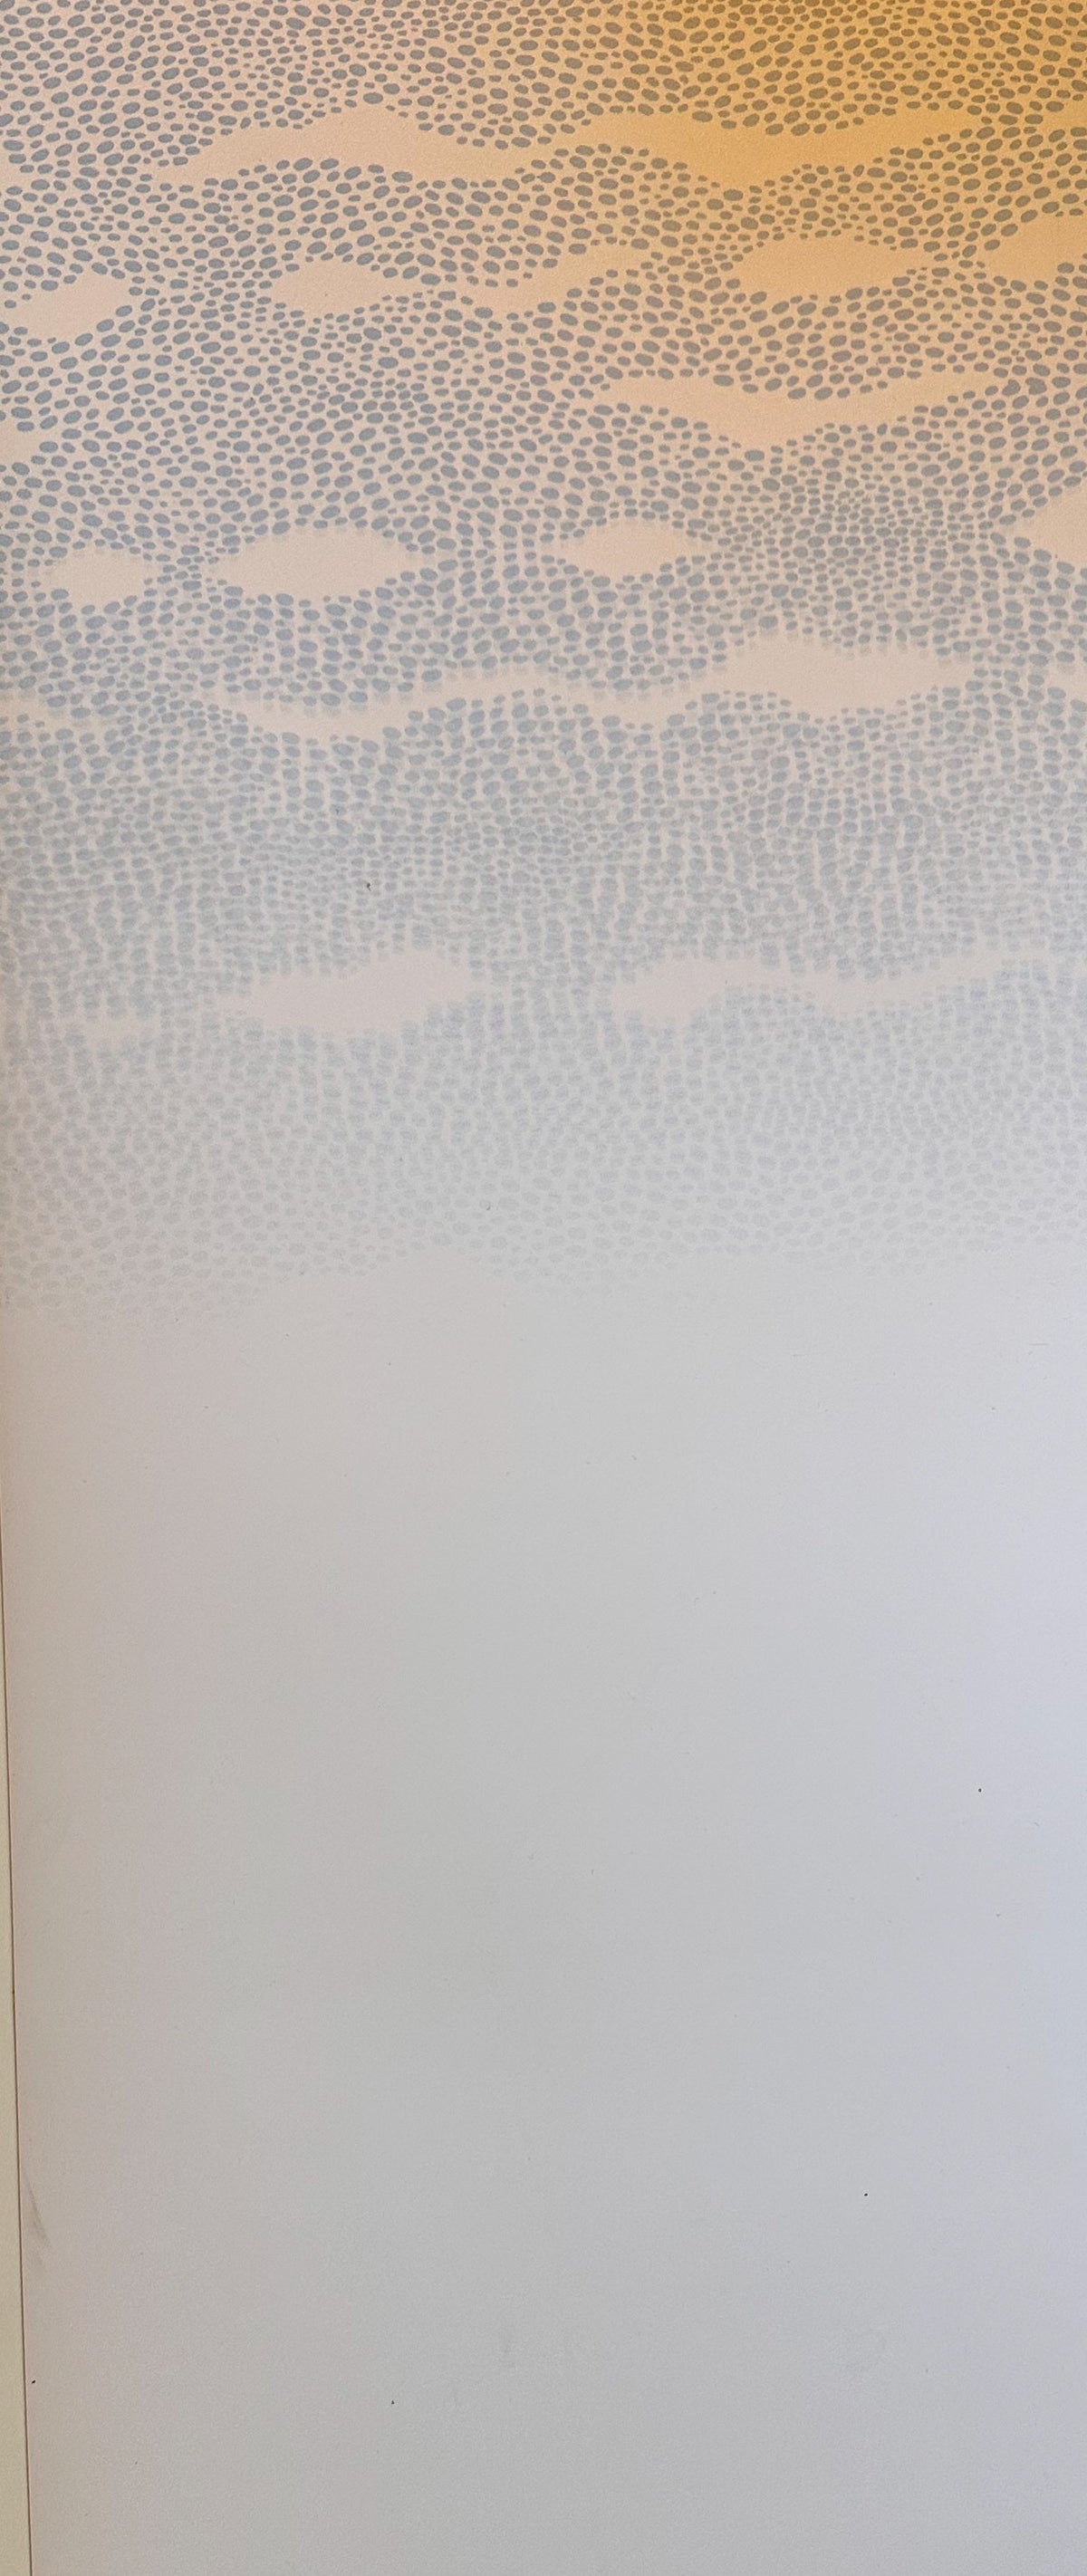 FINAL SALE on Misprints or Damaged Locker Wallpaper